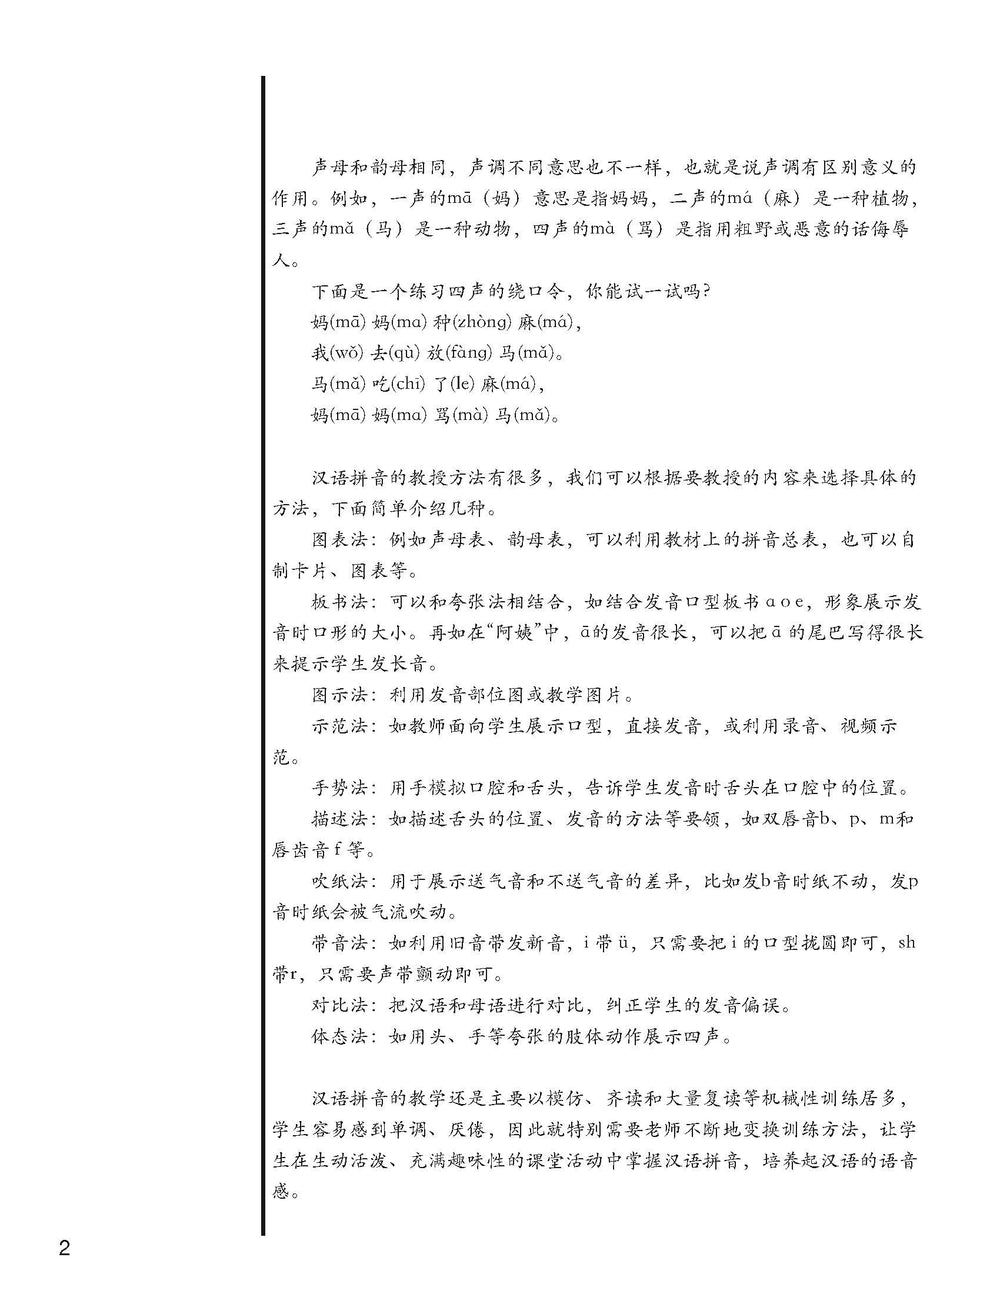 Pinyin Program Teacher's Guide 汉语拼音教师指引